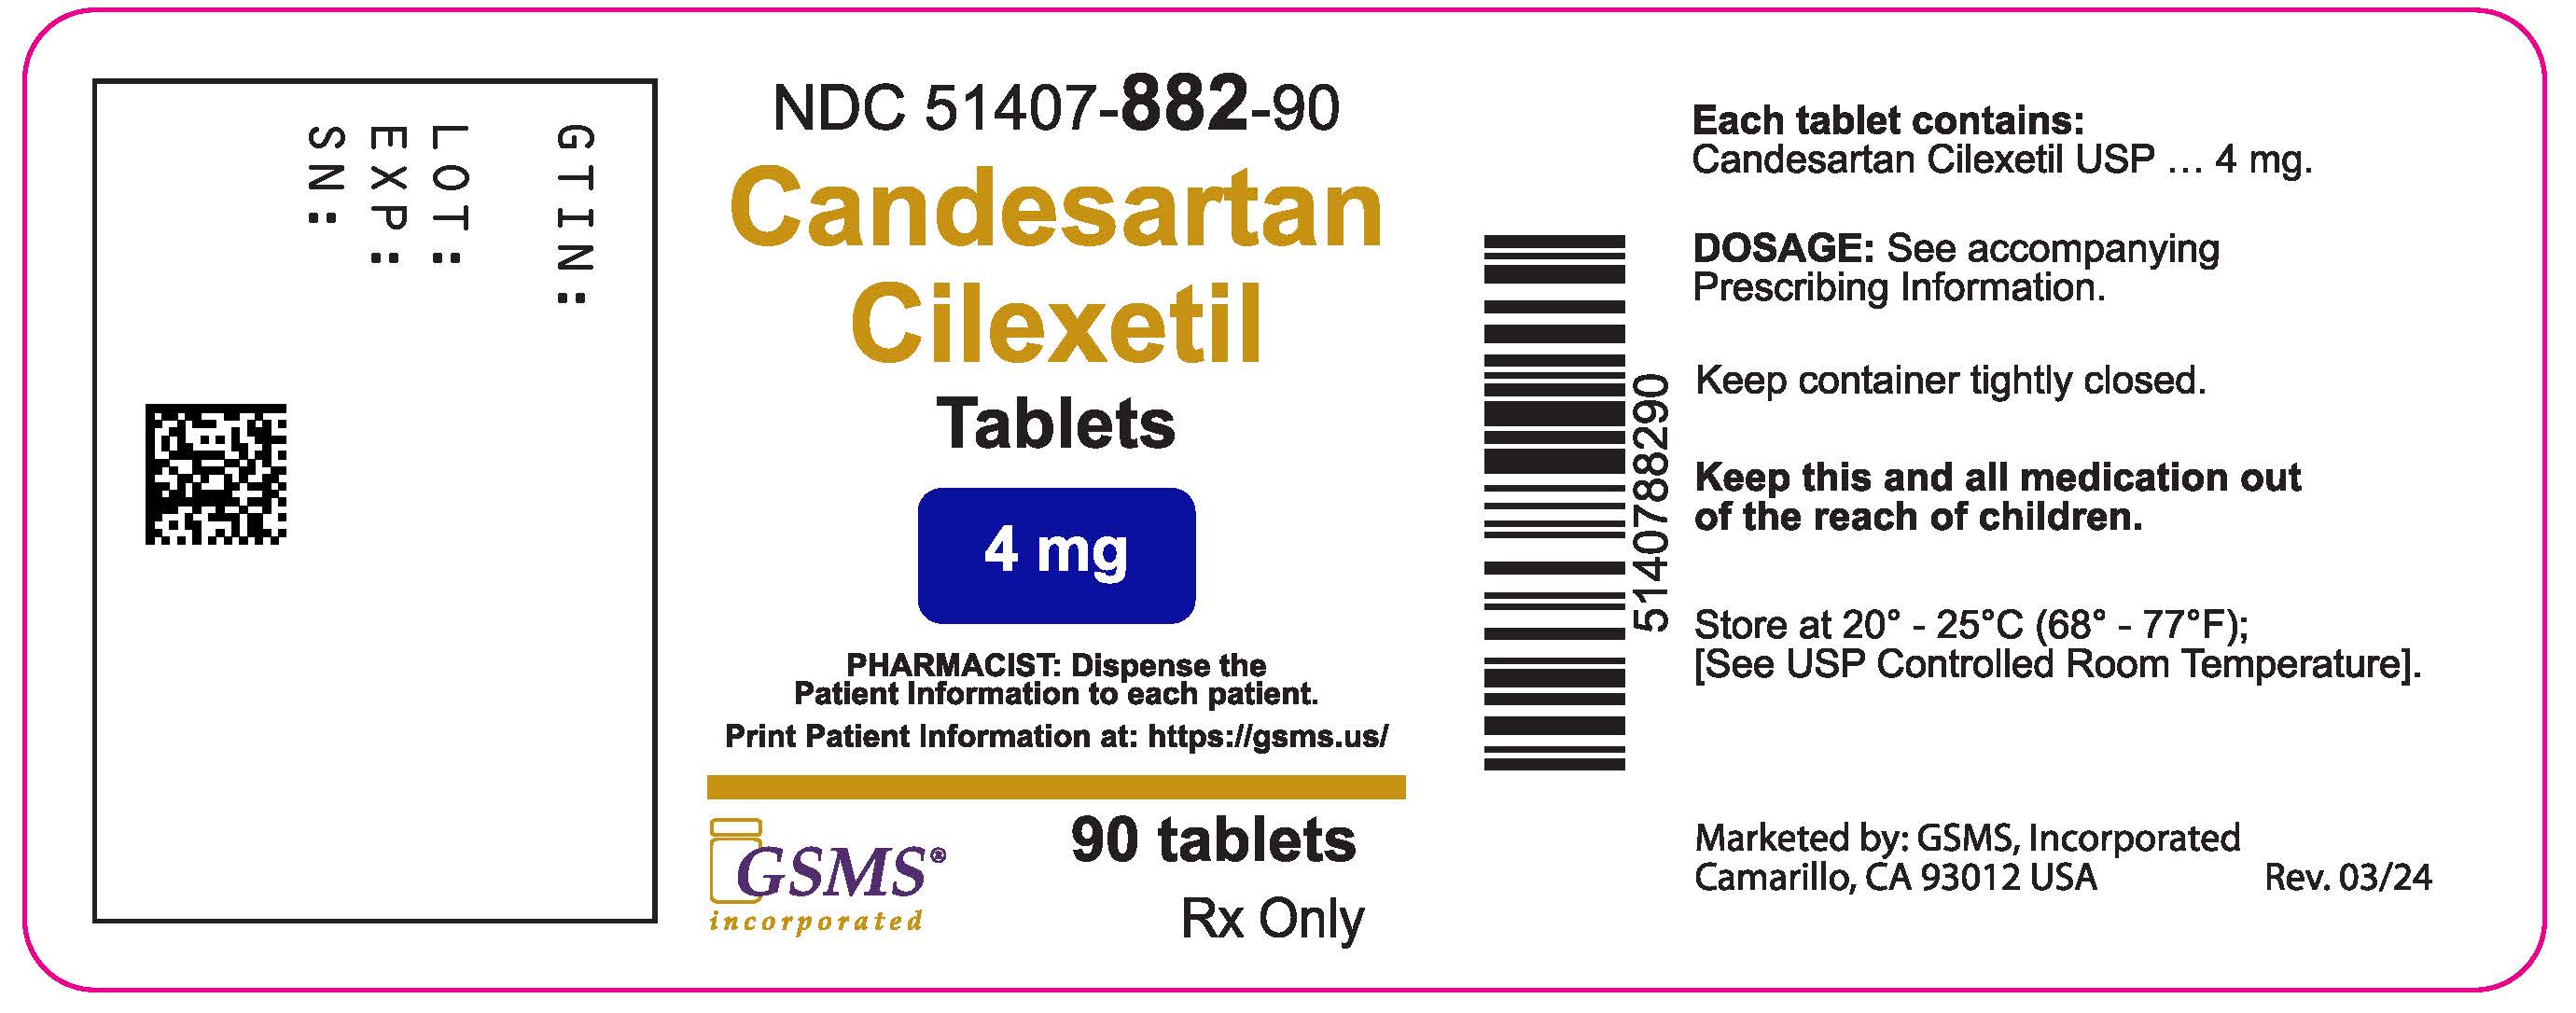 51407-882-90 - Candesartan Cilexetil 4 mg - Rev. 0324.jpg